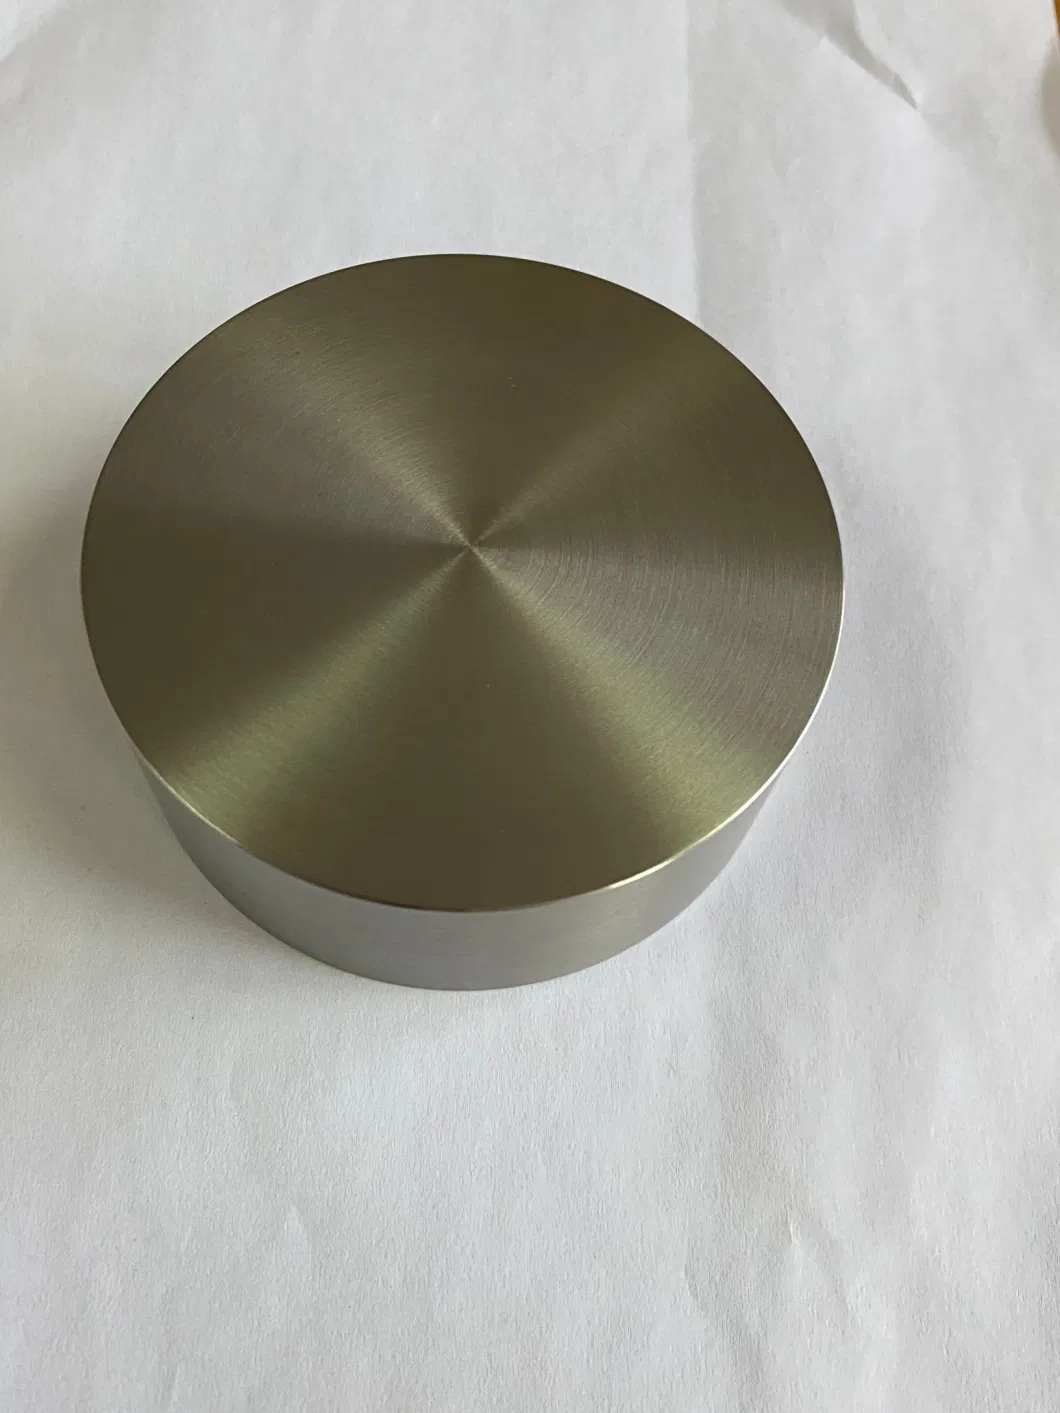 99.95%Pure Molybdenum Disc Mola Tzm Molybdenum Sheet /Plate/Wafer/ Disc